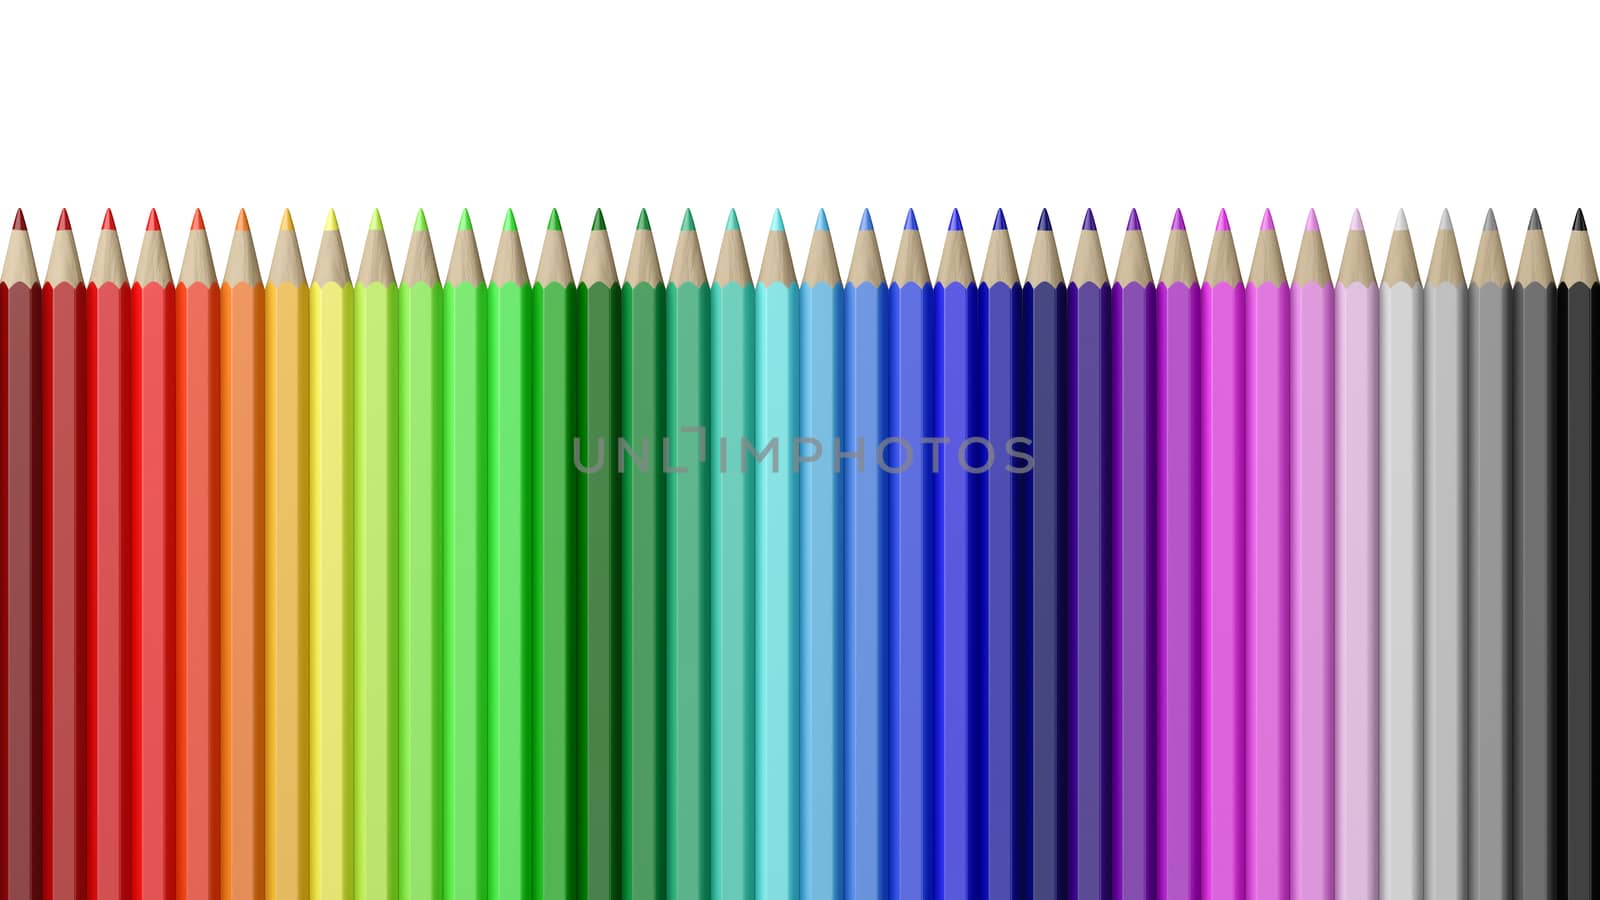 Rainbow of Colorful Wood Pencils Aligned Isolated on White Background Illustration